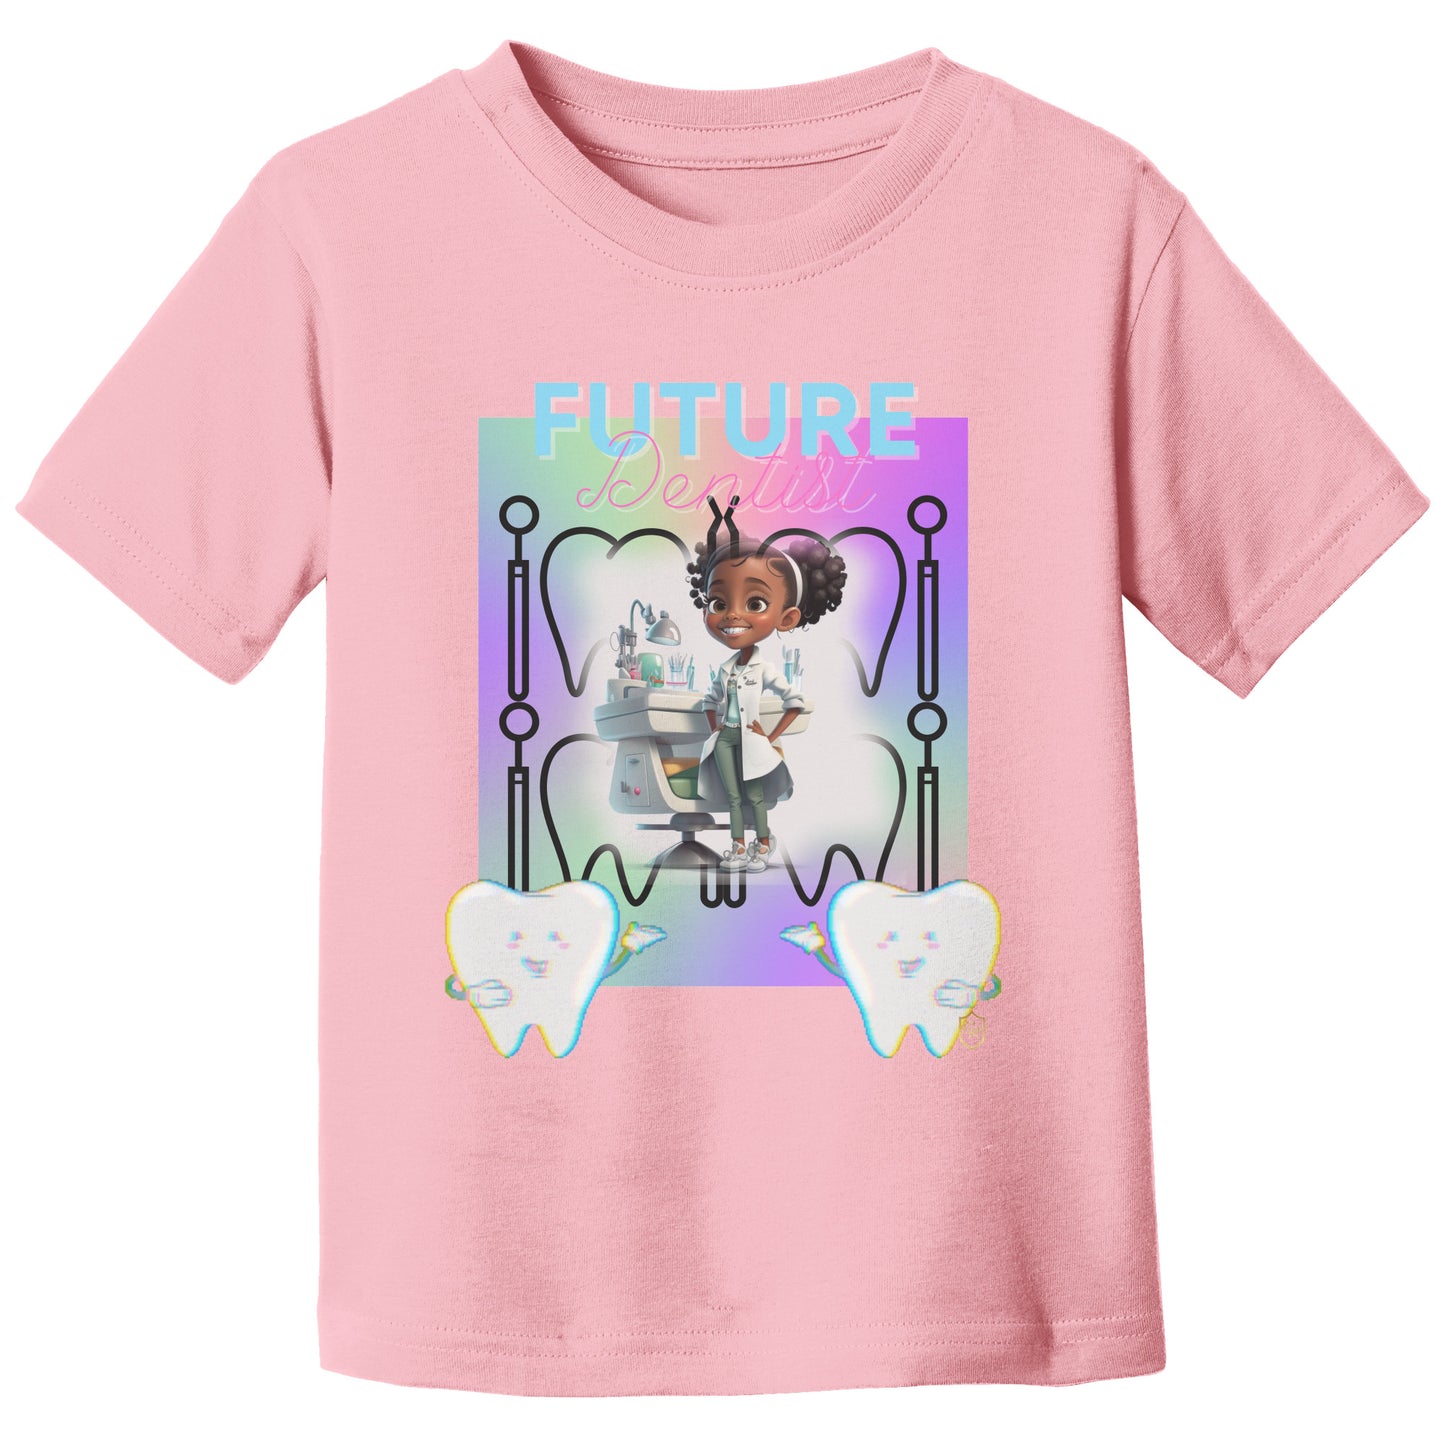 Girl's Future Dentist T-shirt